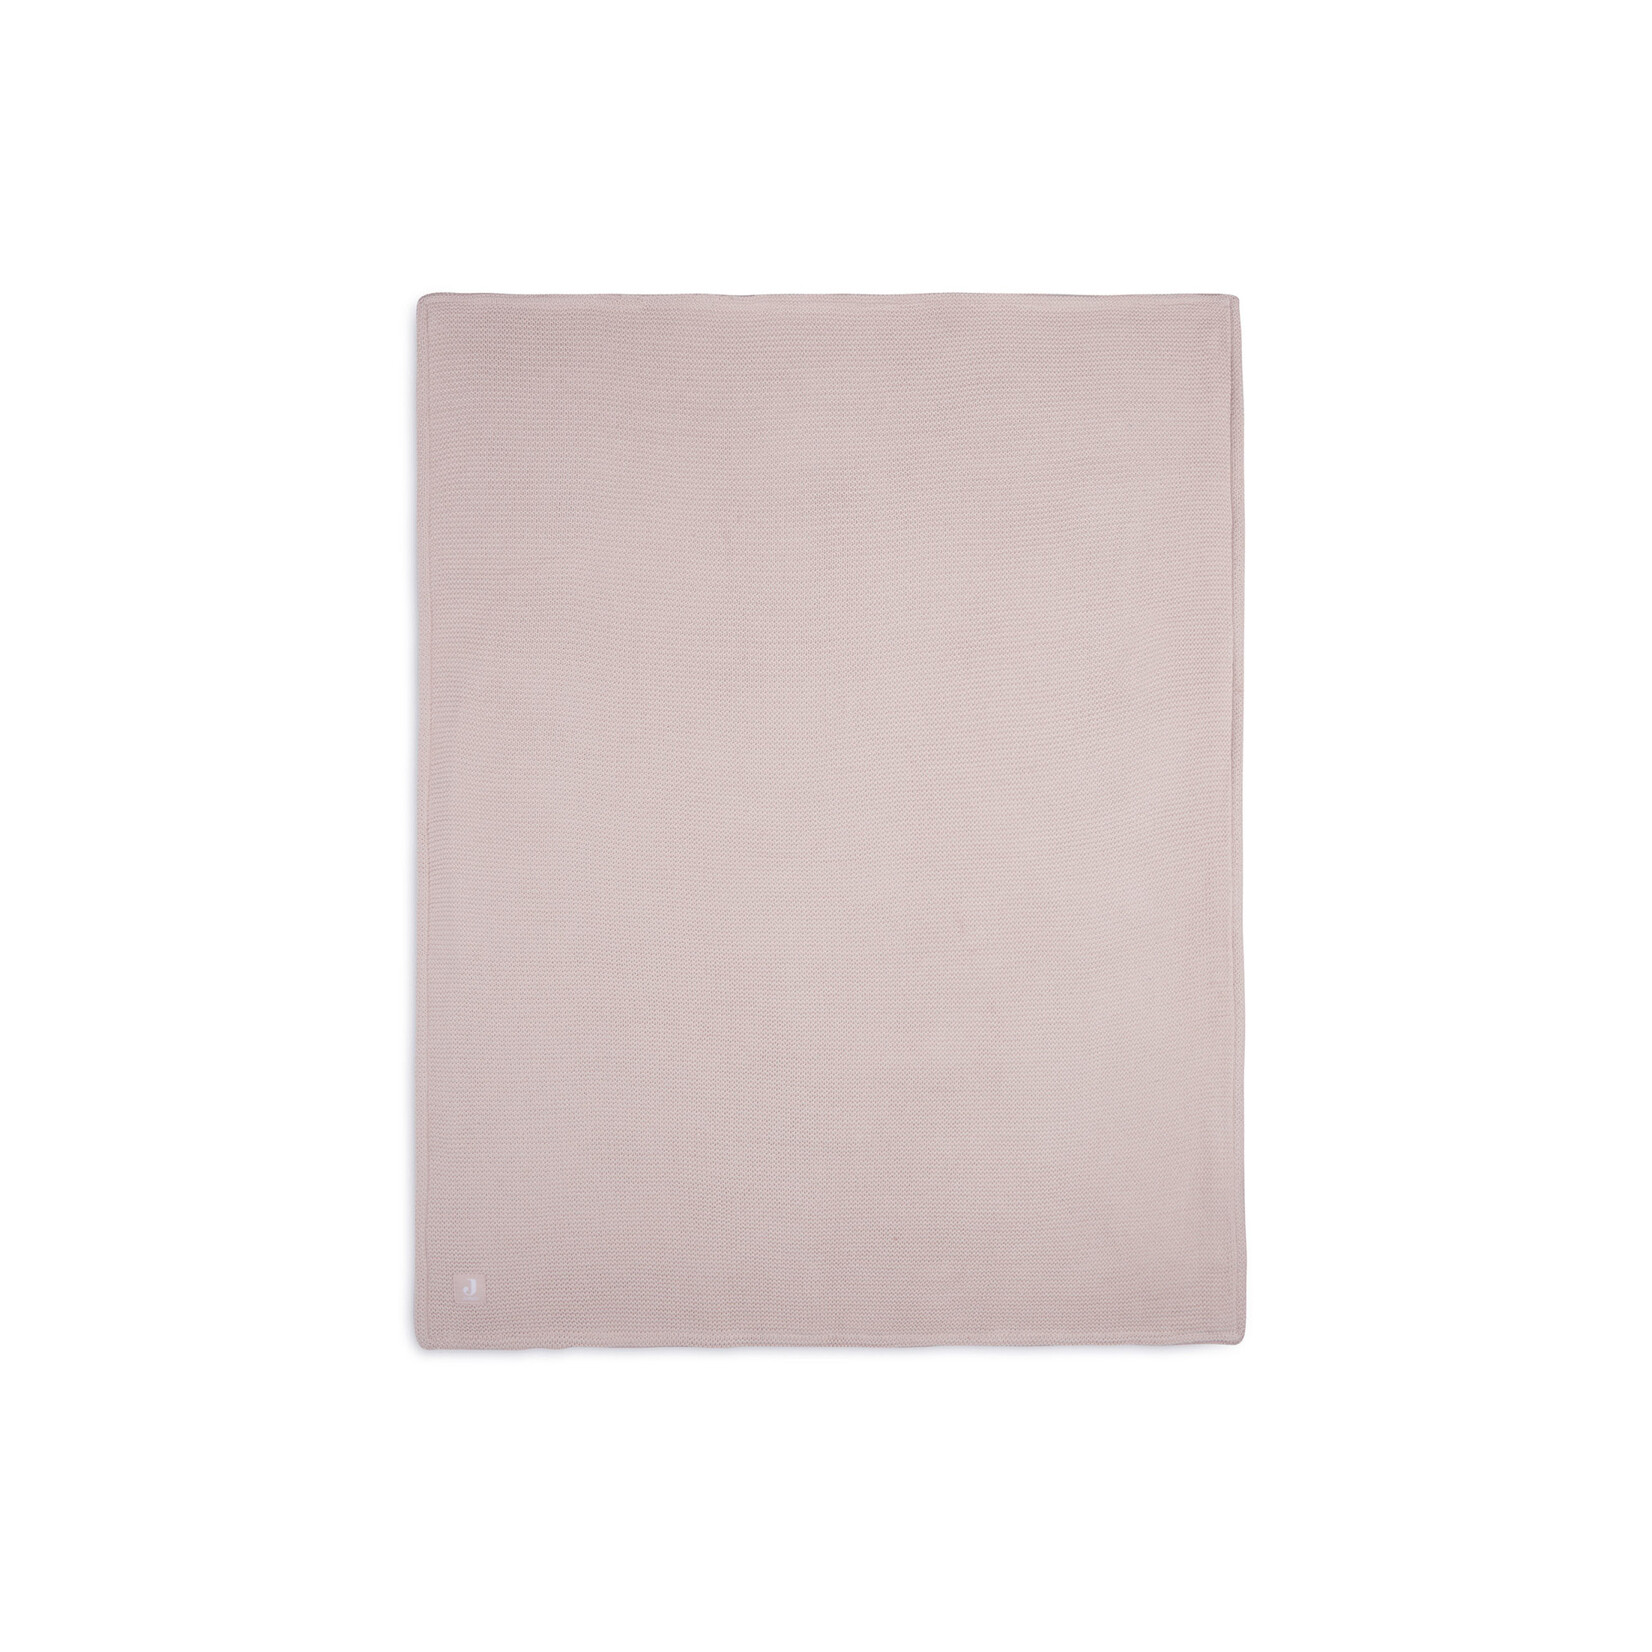 Jollein Jollein - Deken Ledikant 100x150cm Basic Knit Pale Pink/Fleece